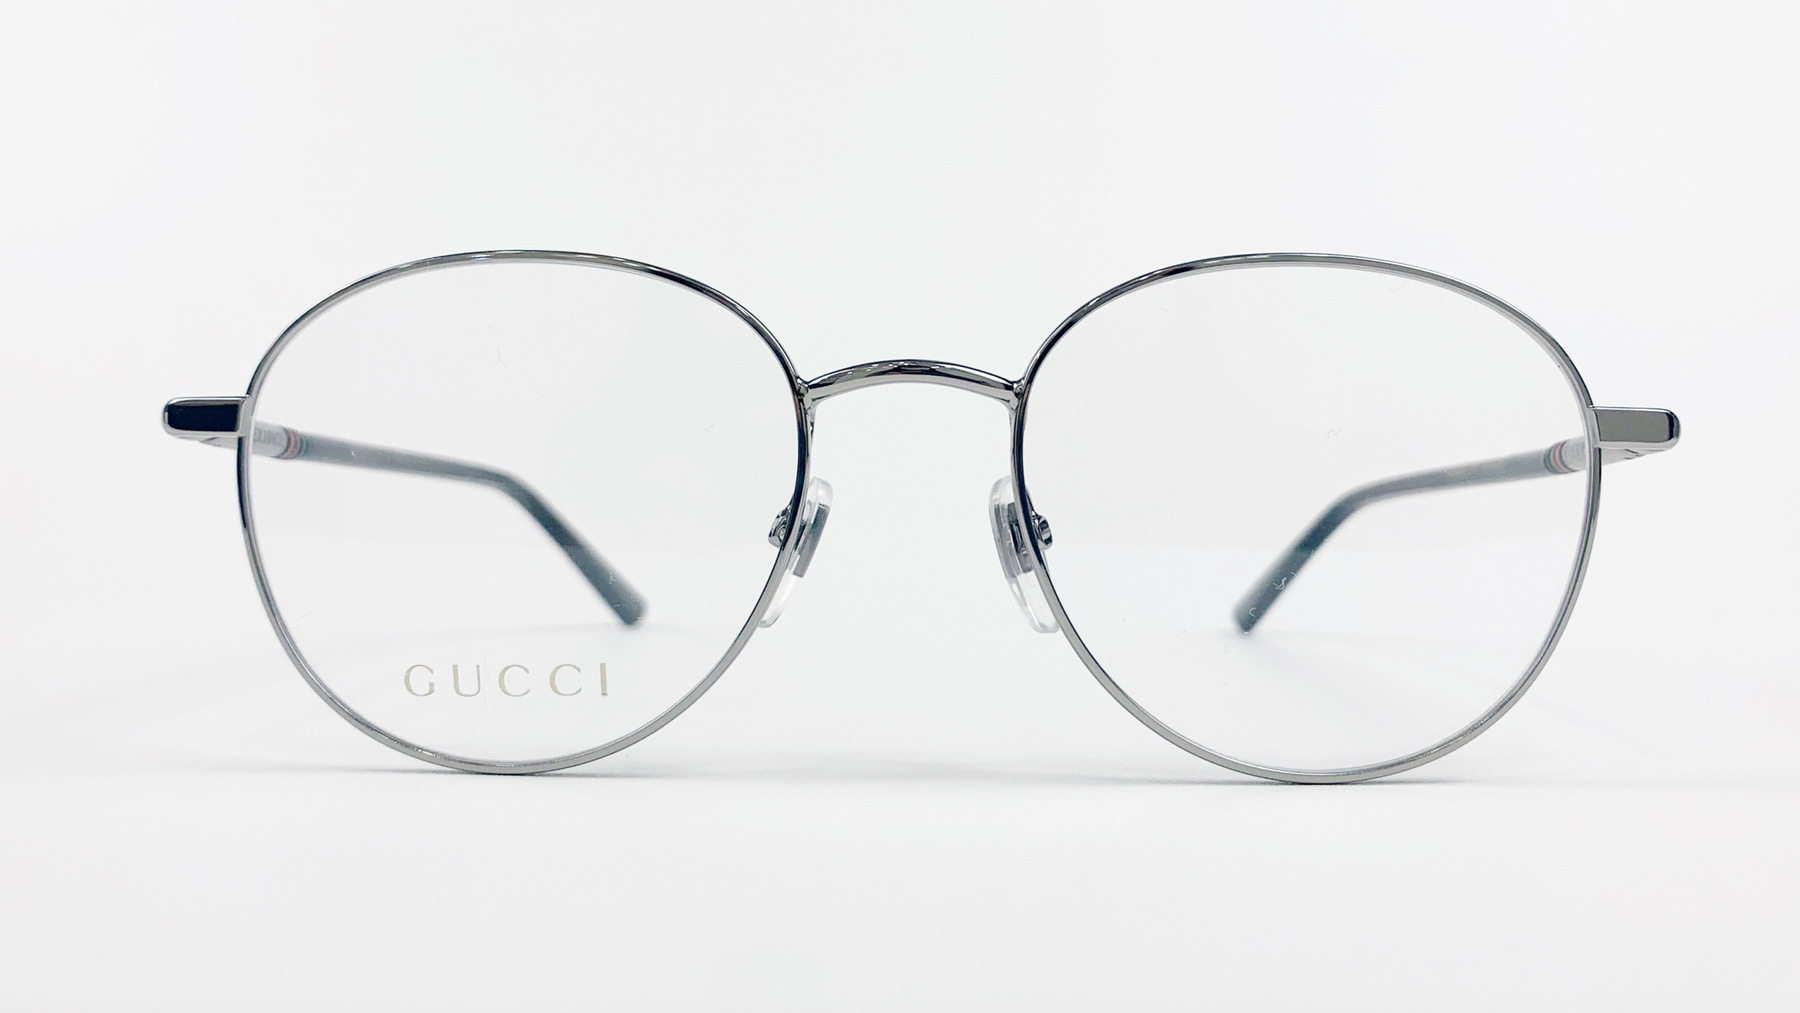 GUCCI GG03920, Korean glasses, sunglasses, eyeglasses, glasses